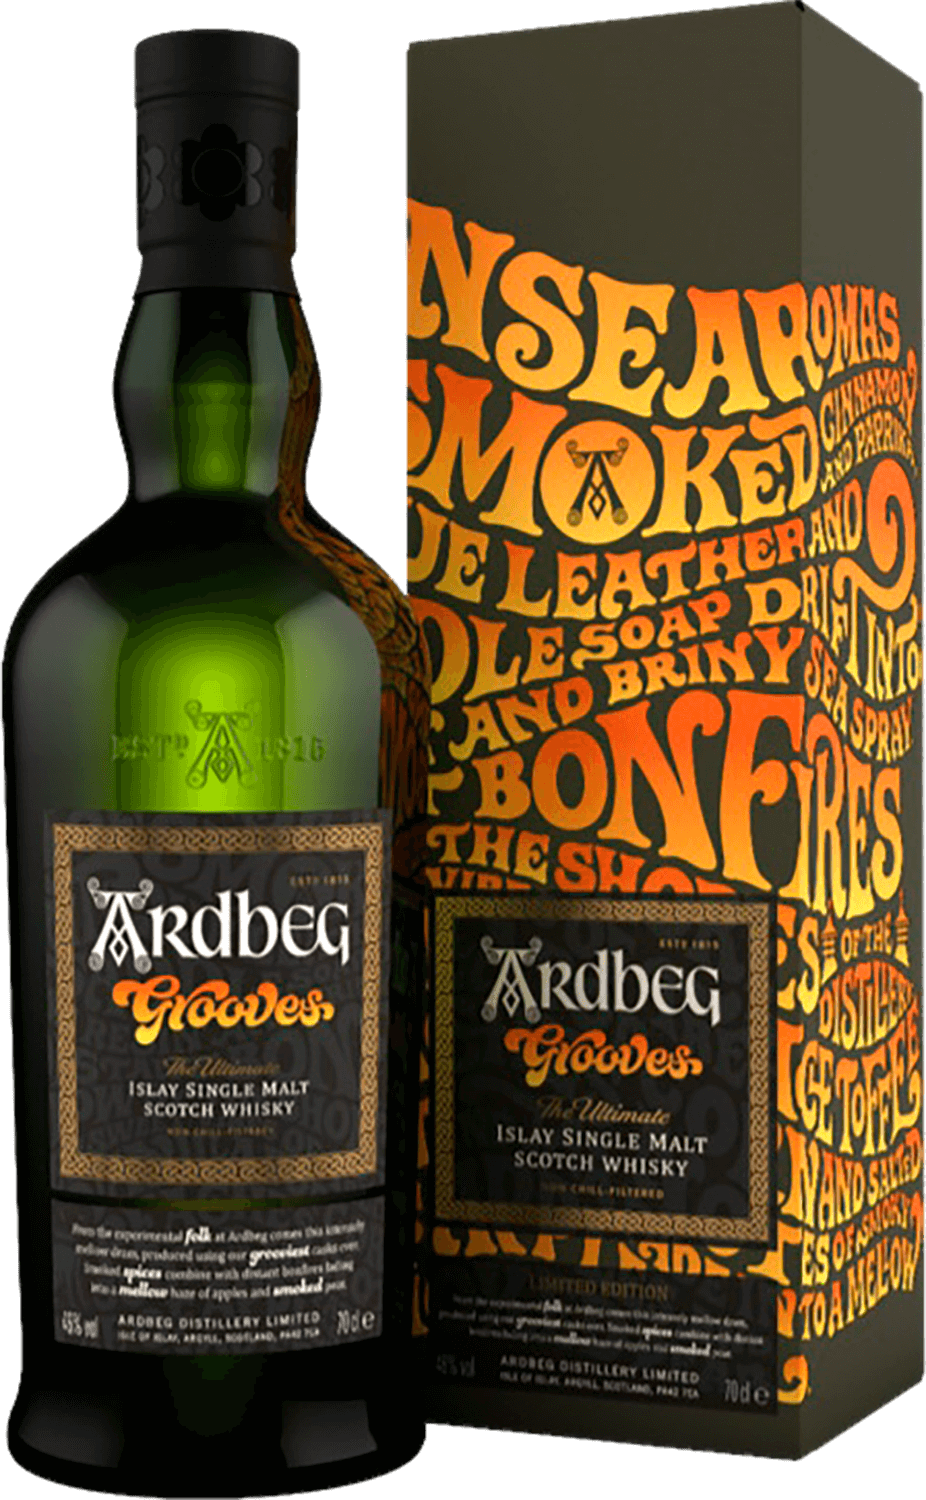 Ardbeg Grooves Islay Single Malt Scotch Whisky (gift box) wemyss malts maritime memories bunnahabhain 1987 islay single cask single malt scotch whisky gift box